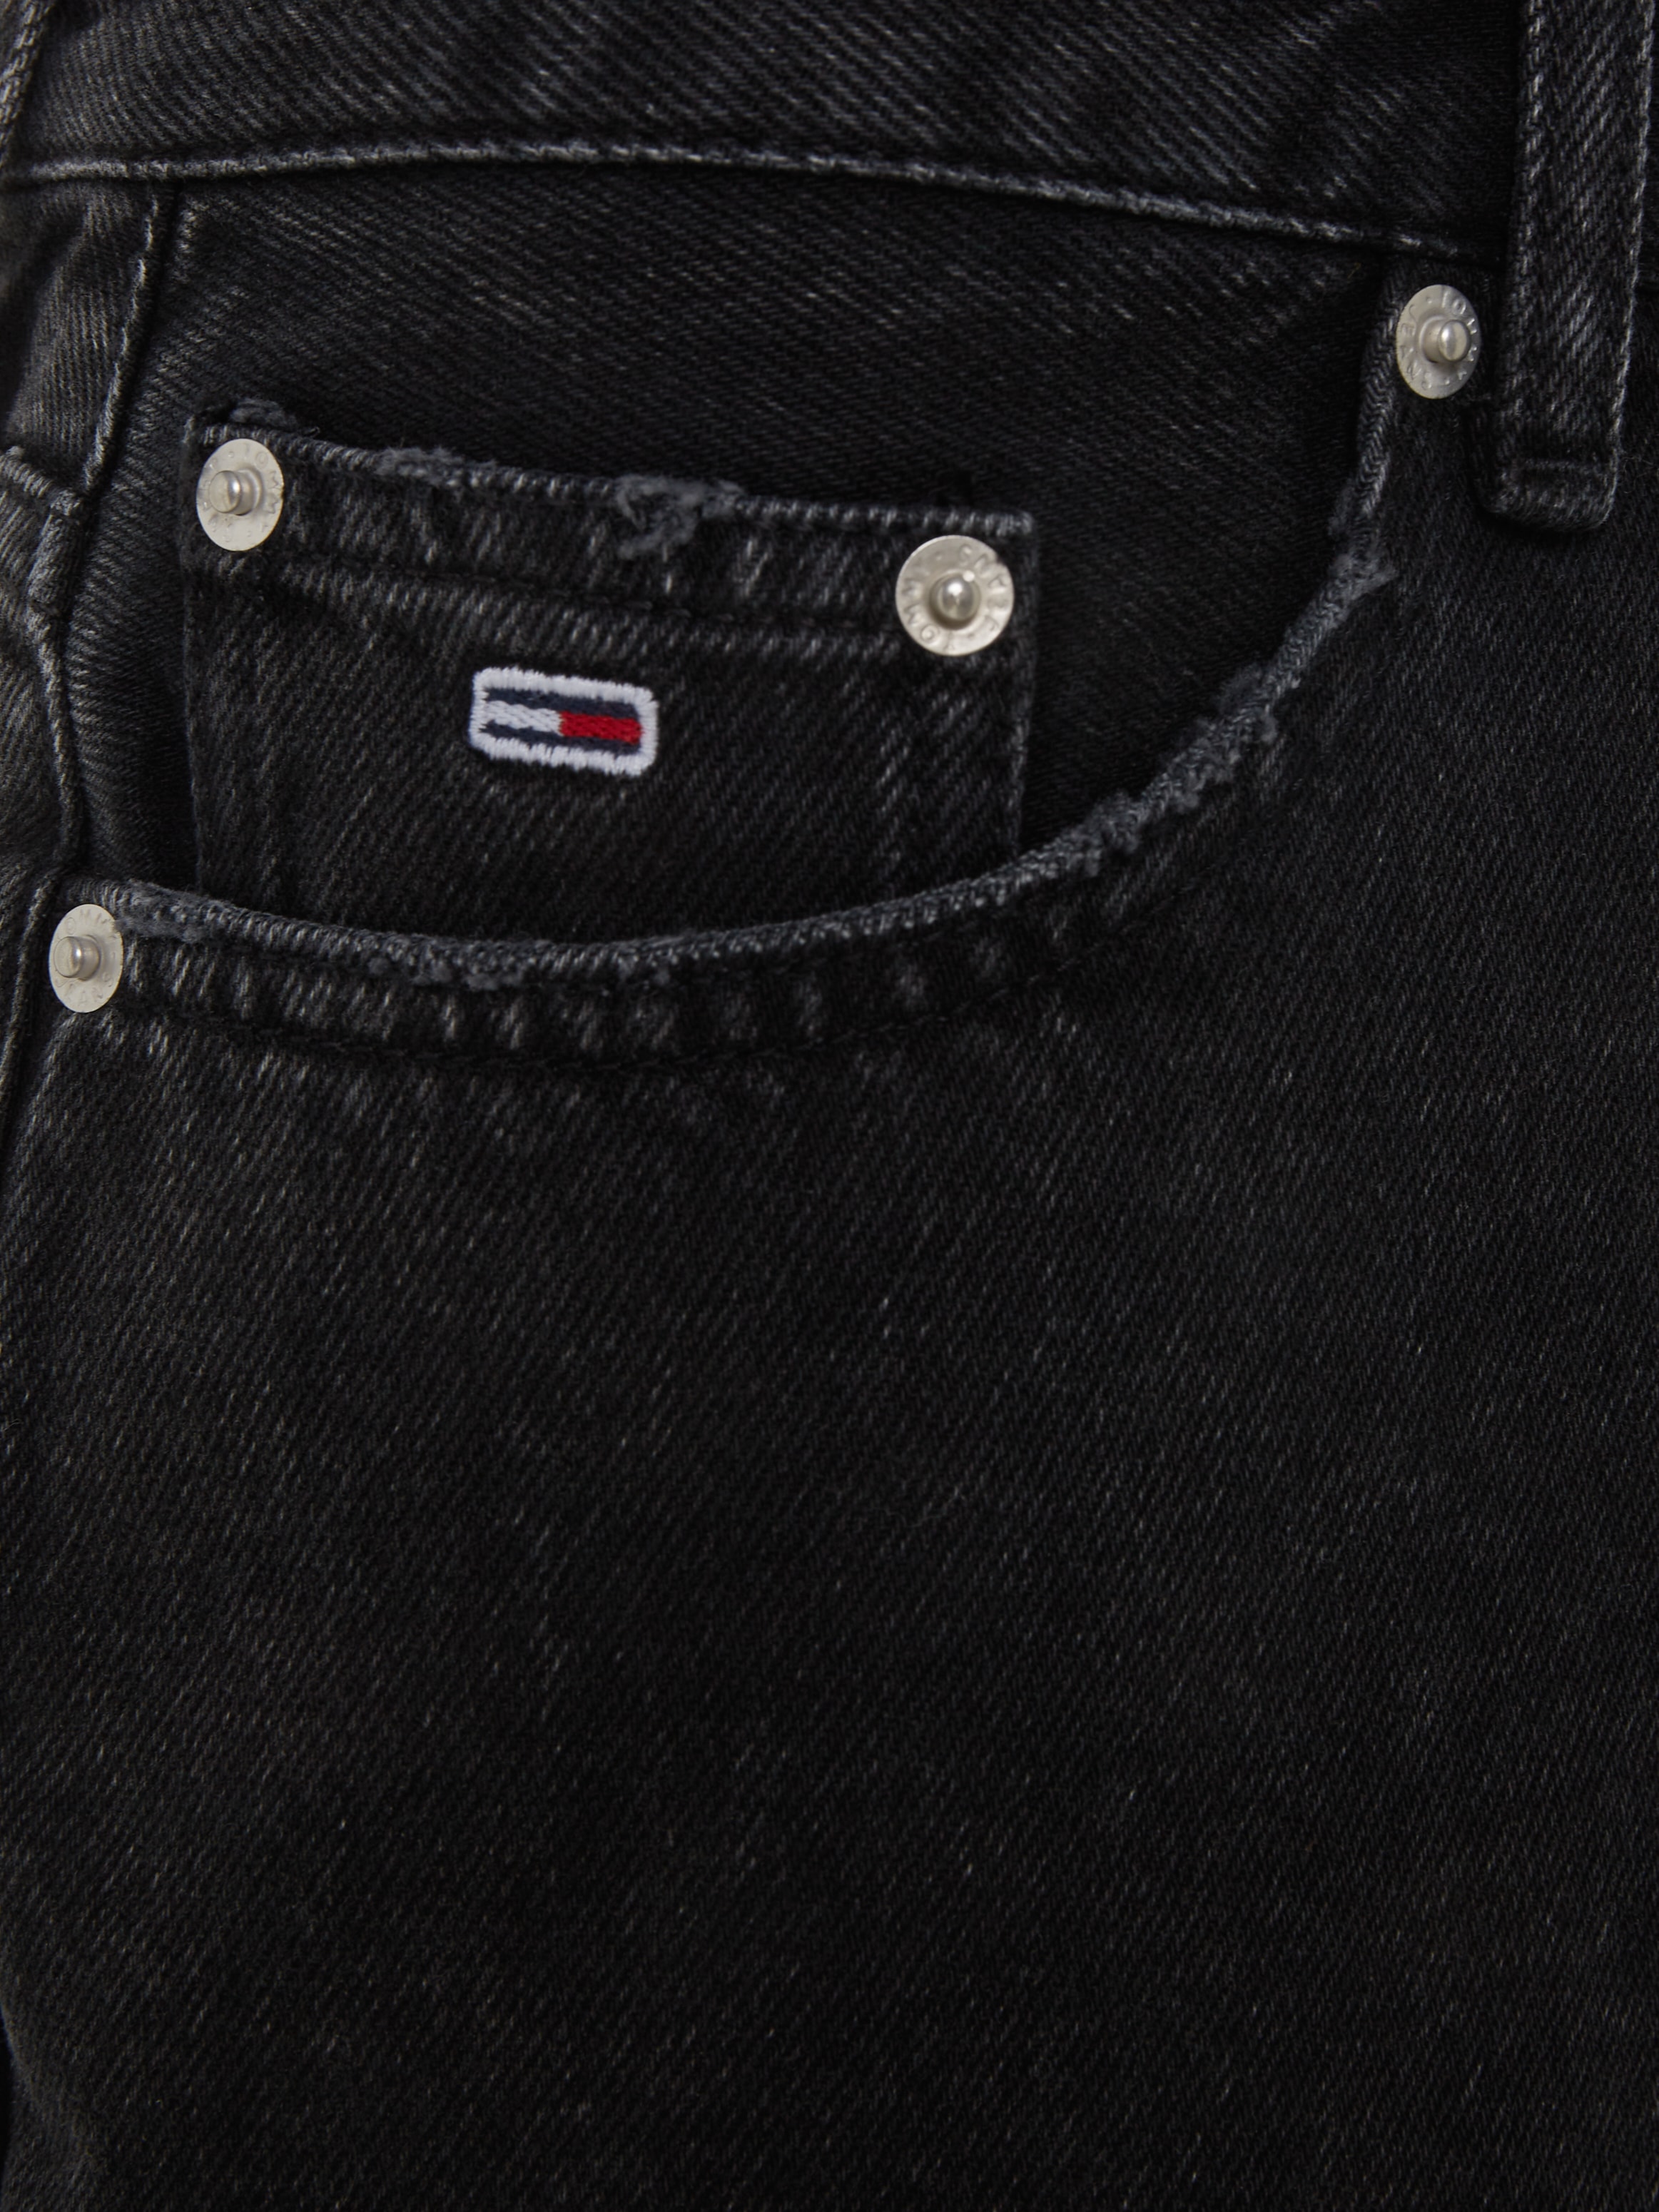 Tommy Jeans Jeansrock »LW MCR MN SKIRT BH0082«, Webrock im 5-Pocket-Style